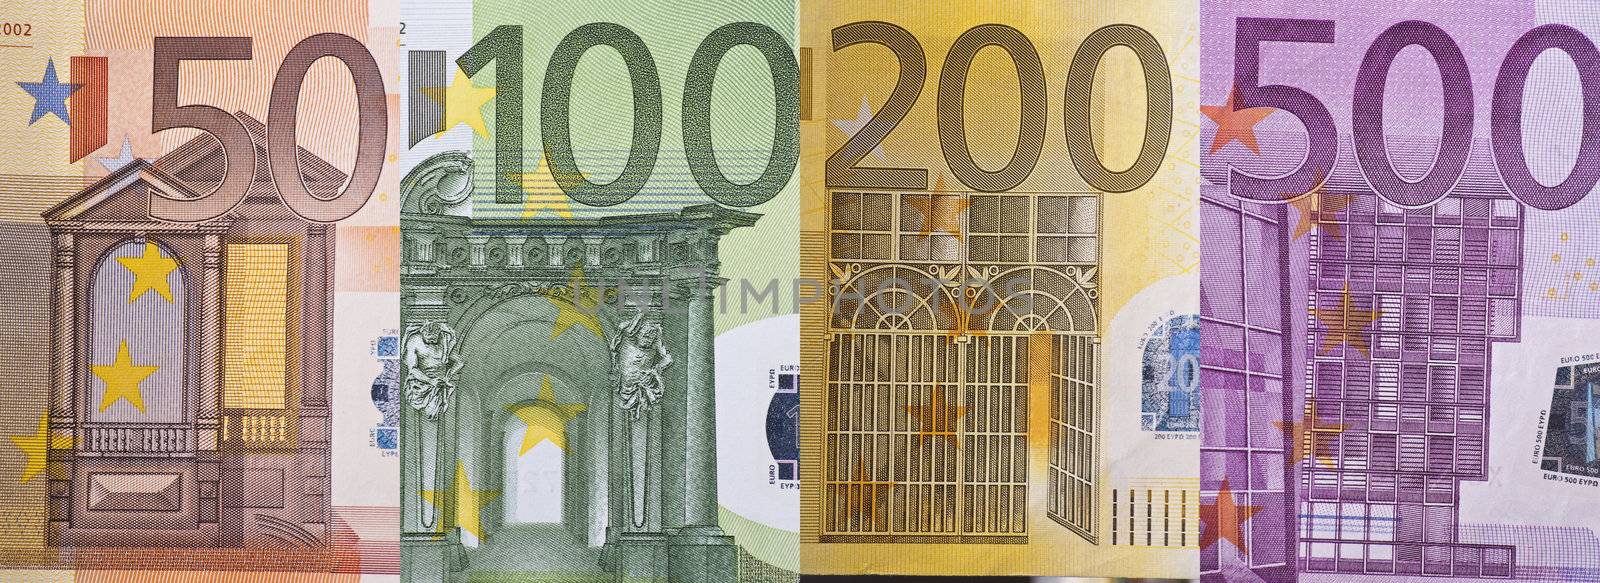 Euro Paper Bill Detail by adamr